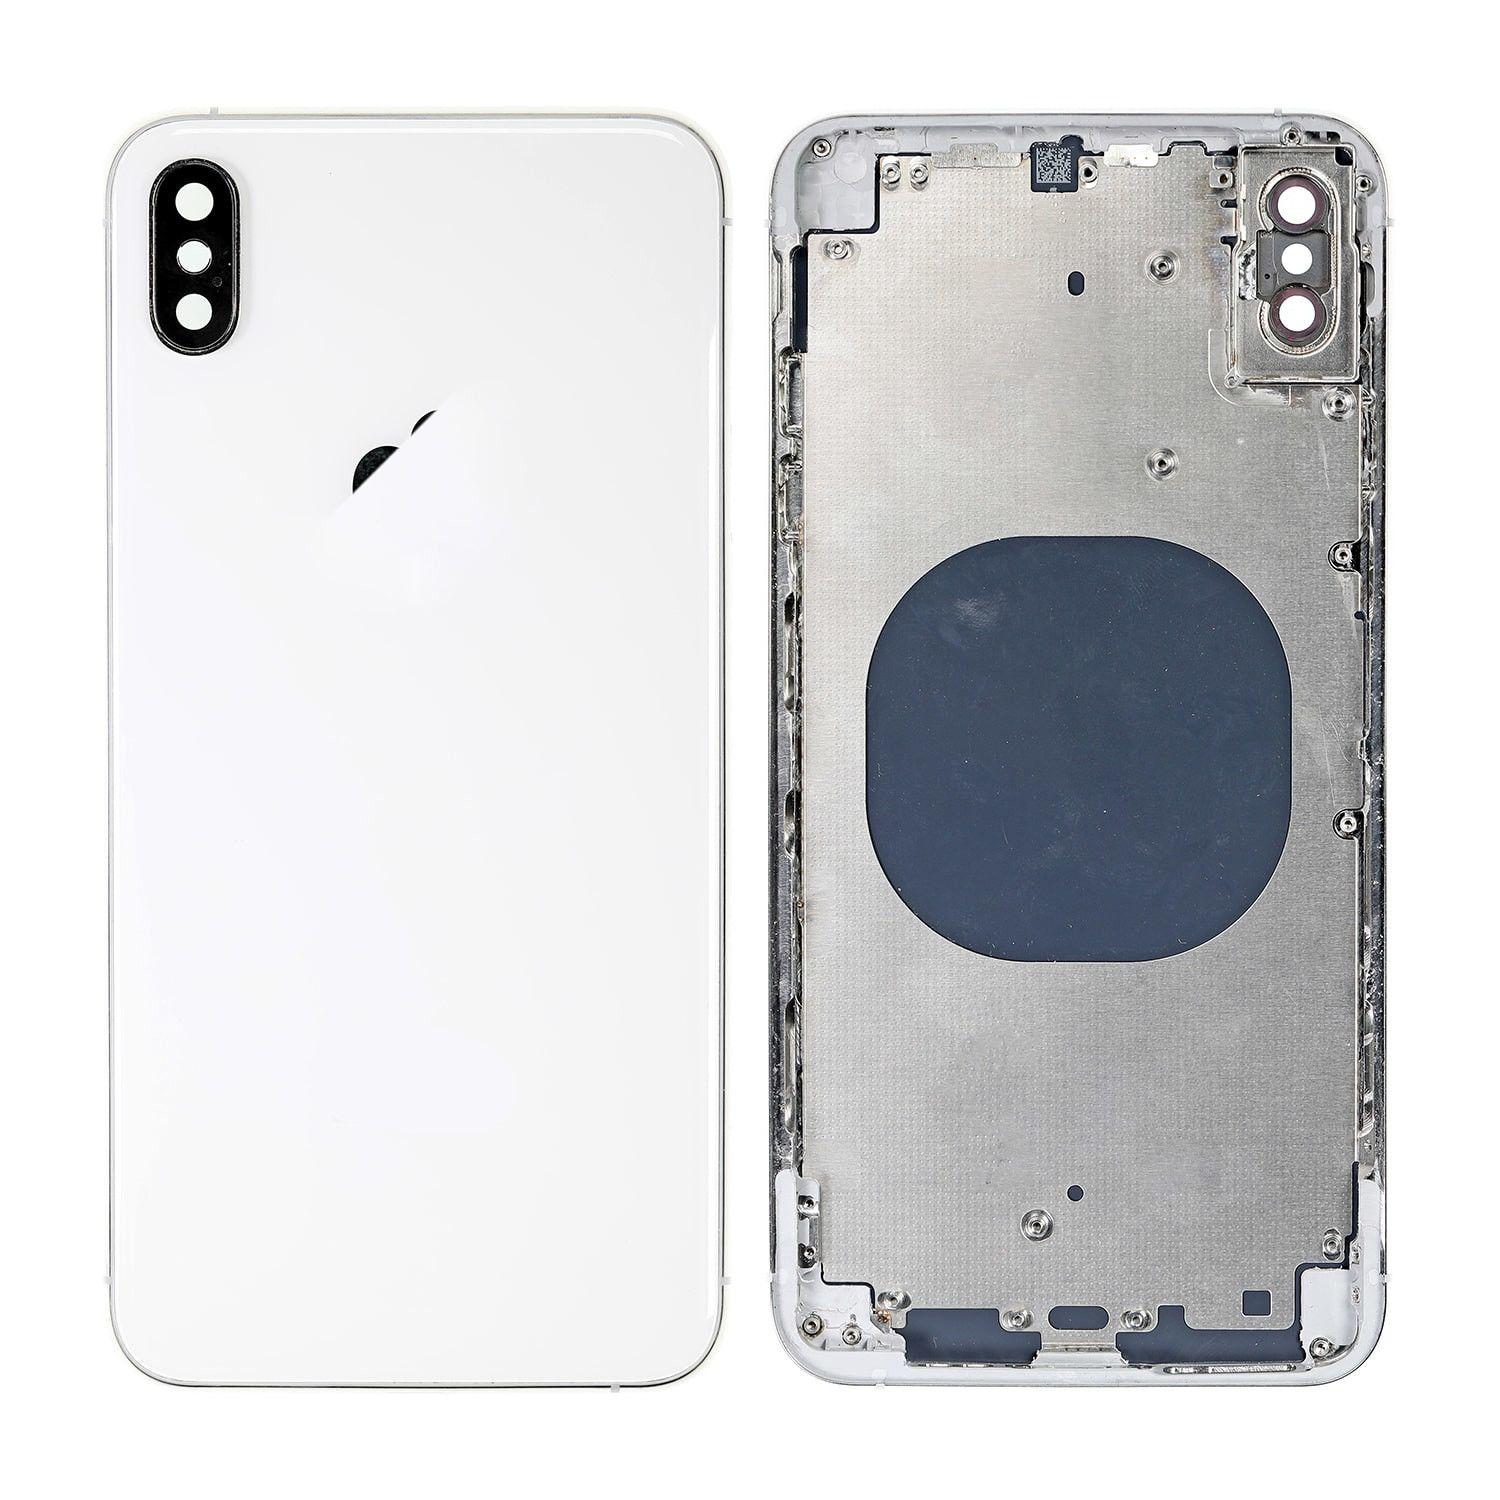 Korpus iPhone Xs Max + zadní kryt bílý